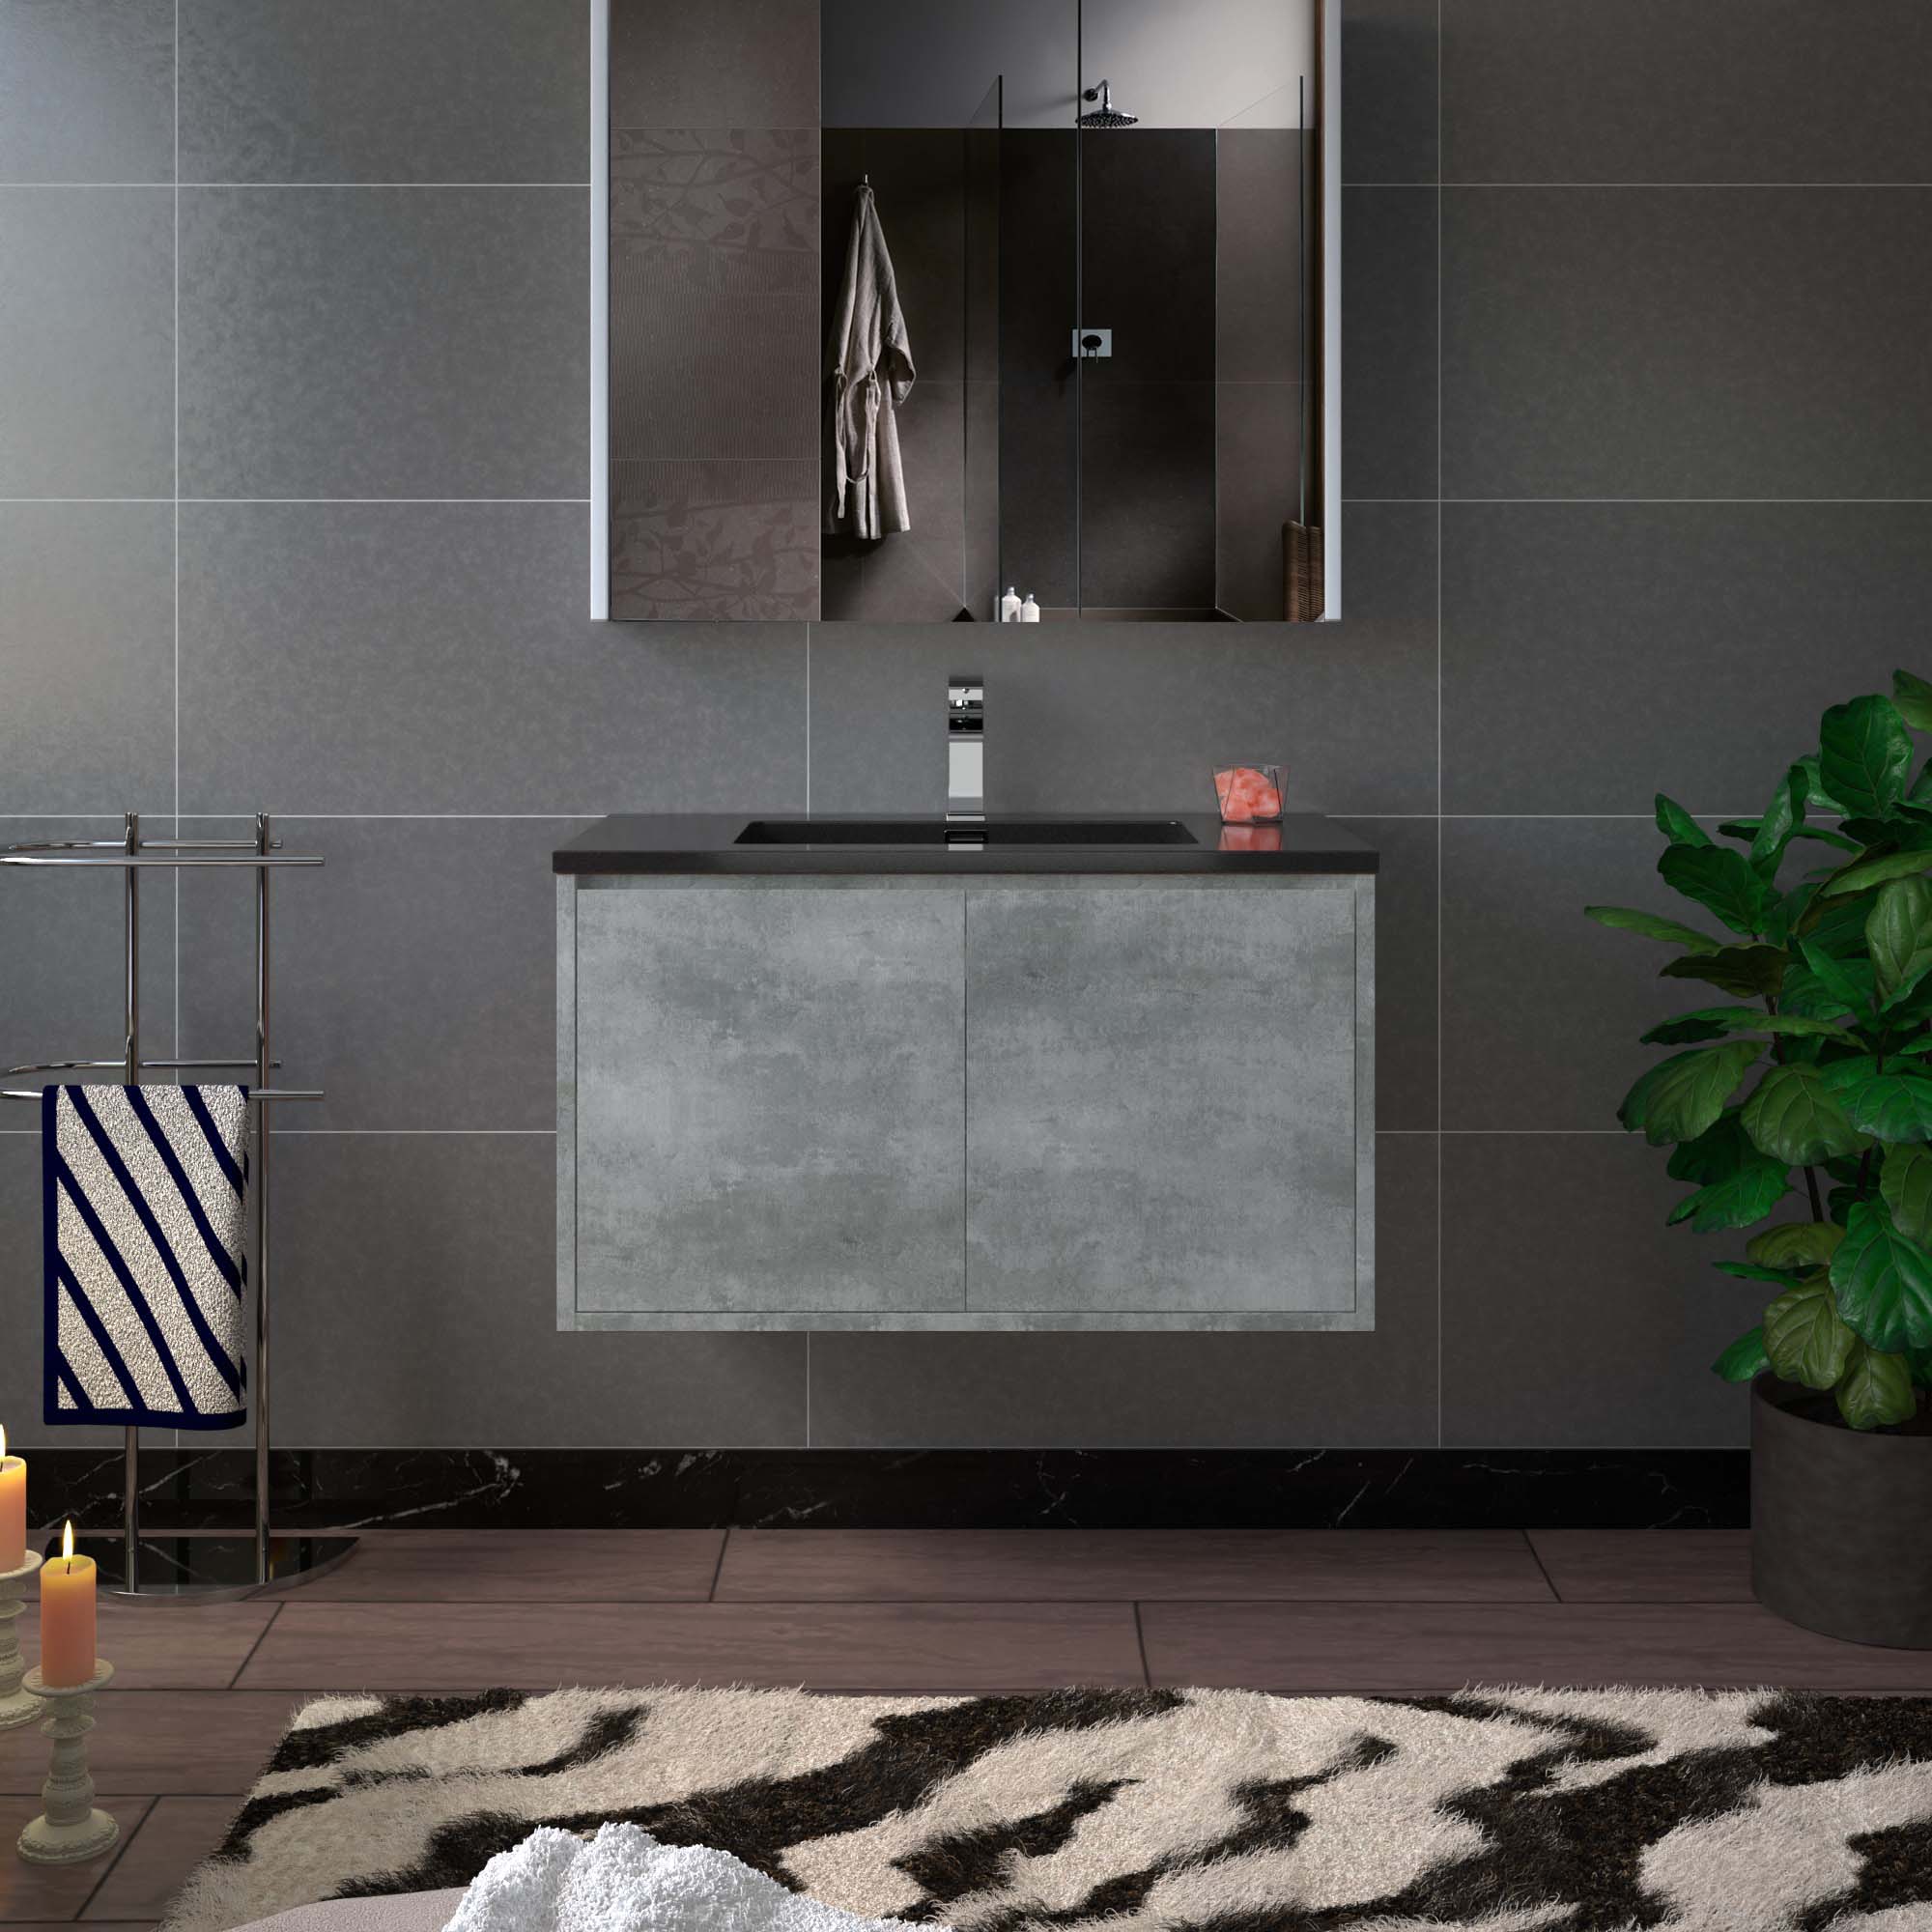 WOODBRIDGE 36 in. W x 19 in. D Bathroom Vanity in Gray with Quartz Sand Composite Vanity Top in Matte Black, with Stainless Steel Frame